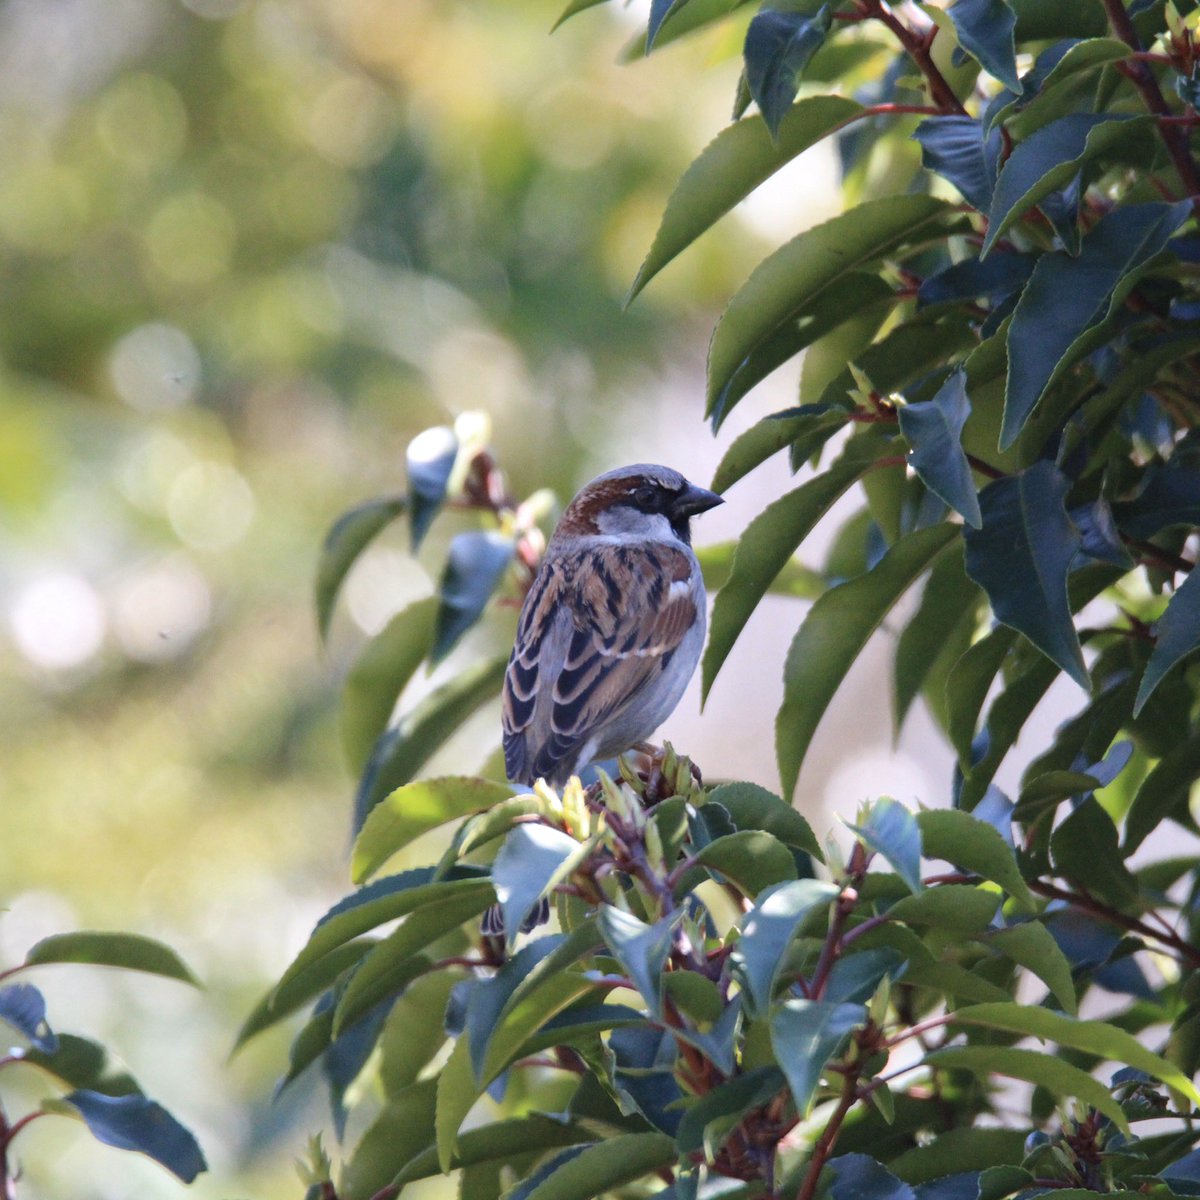 Day two. Male House SparrowFemale House Sparrow PigeonMagpie  #GardenWildlife  #QuarantineWildlife  #WildlifePhotography